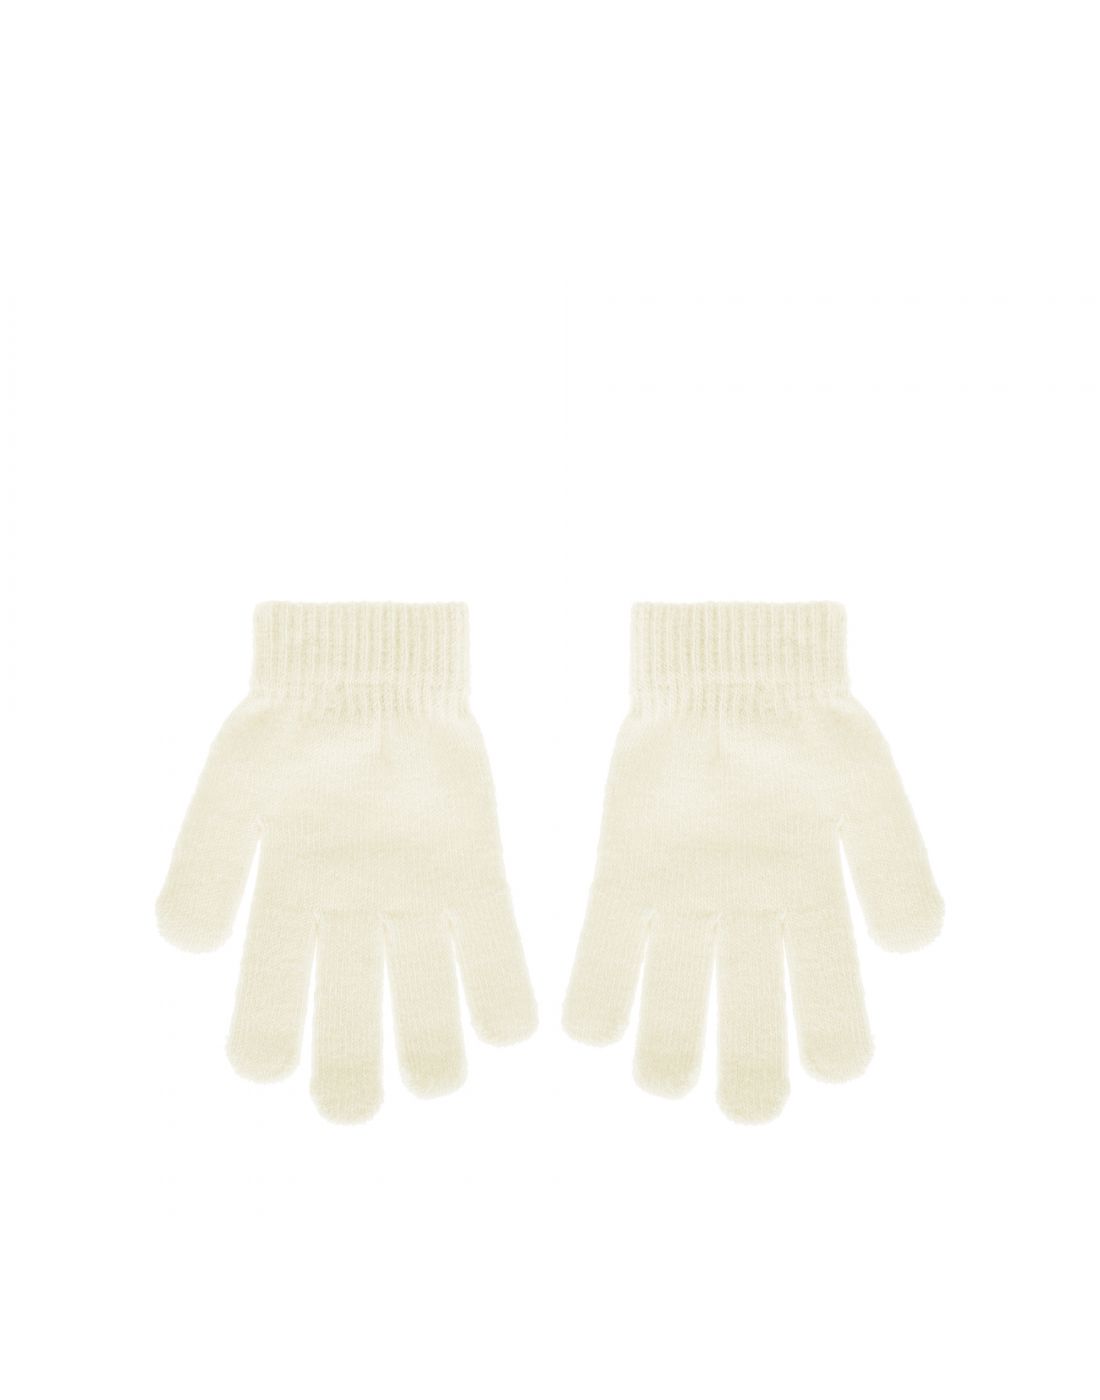 Marini Silvano Kids Gloves